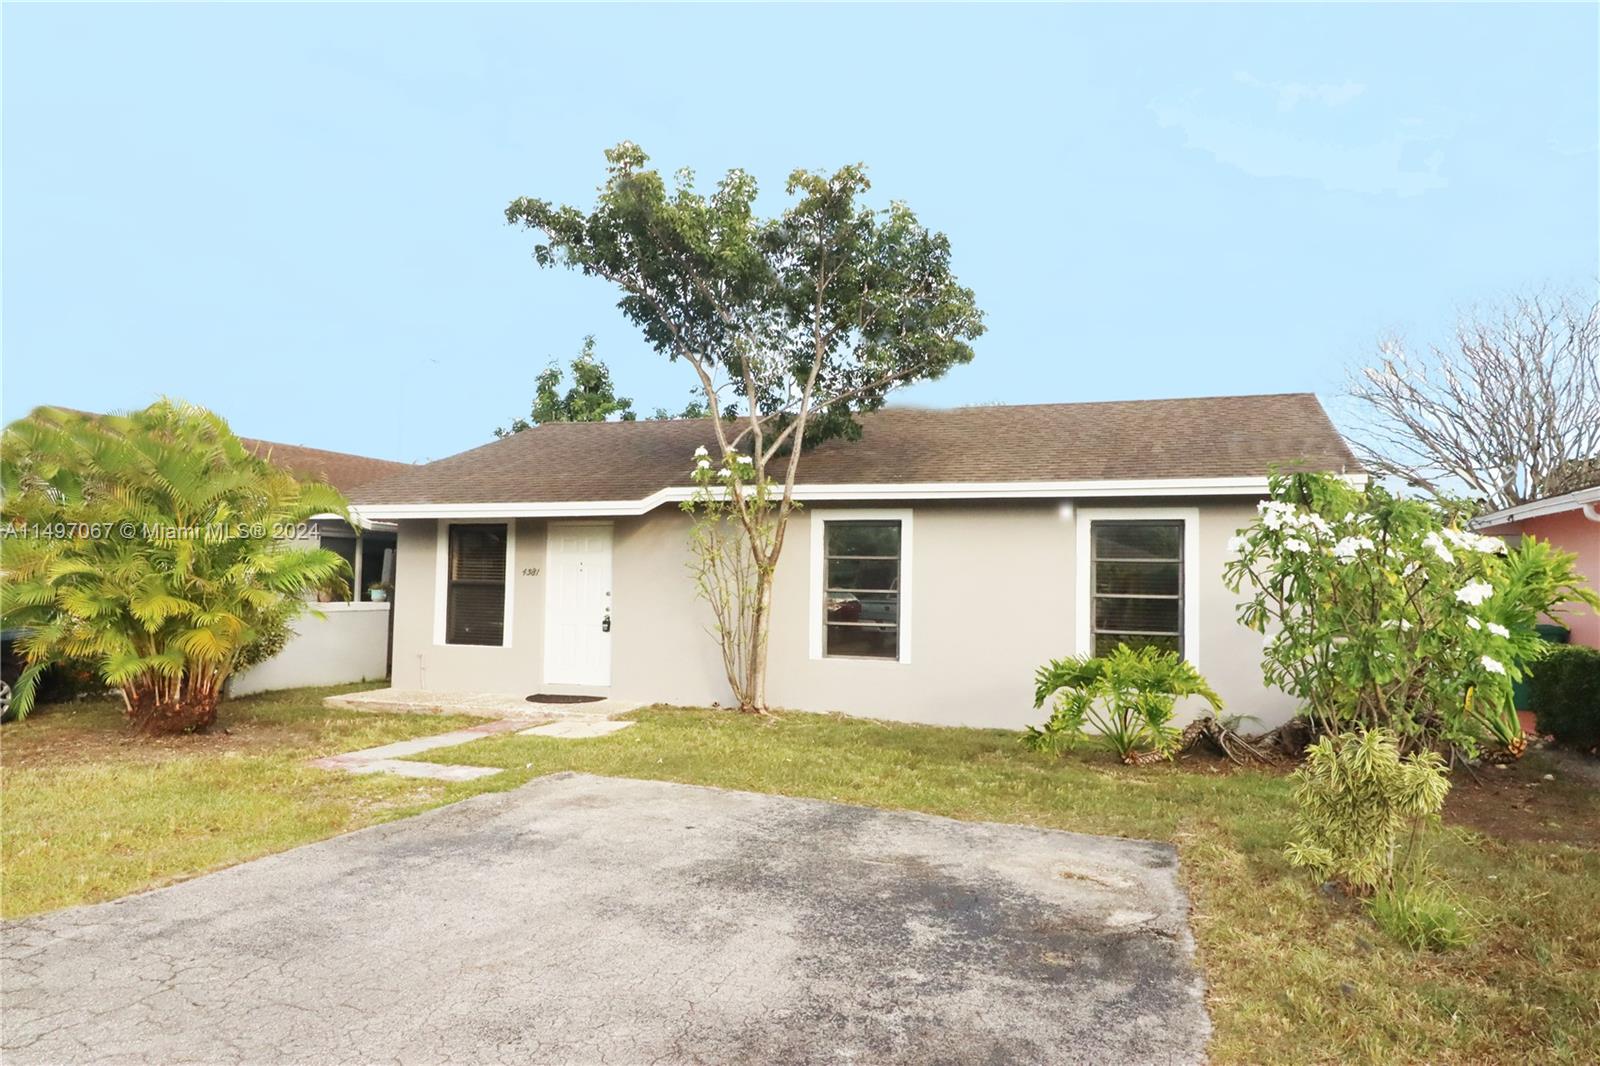 Rental Property at 4581 Sw 137th Ct Ct -, Miami, Broward County, Florida - Bedrooms: 3 
Bathrooms: 2  - $2,200 MO.